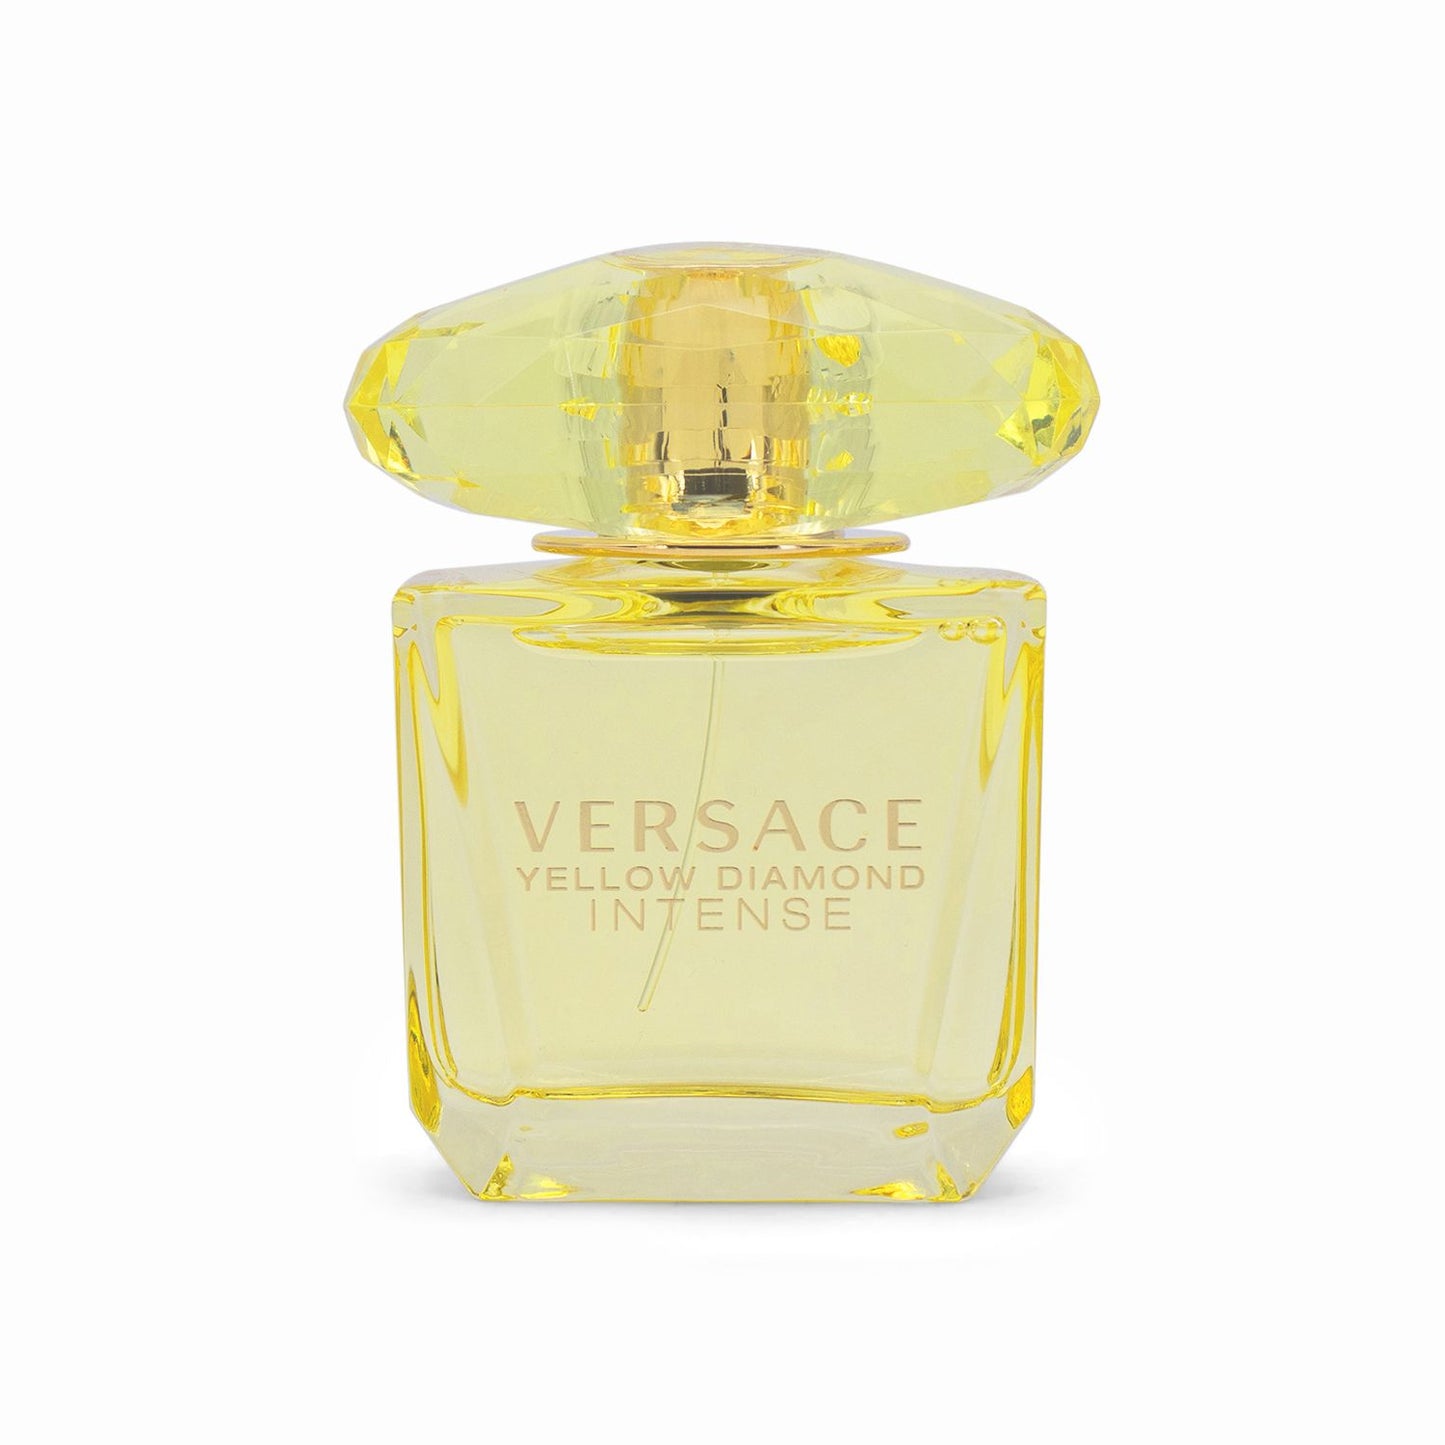 Versace Yellow Diamond Intense Eau de Parfum 30ml - Imperfect Box